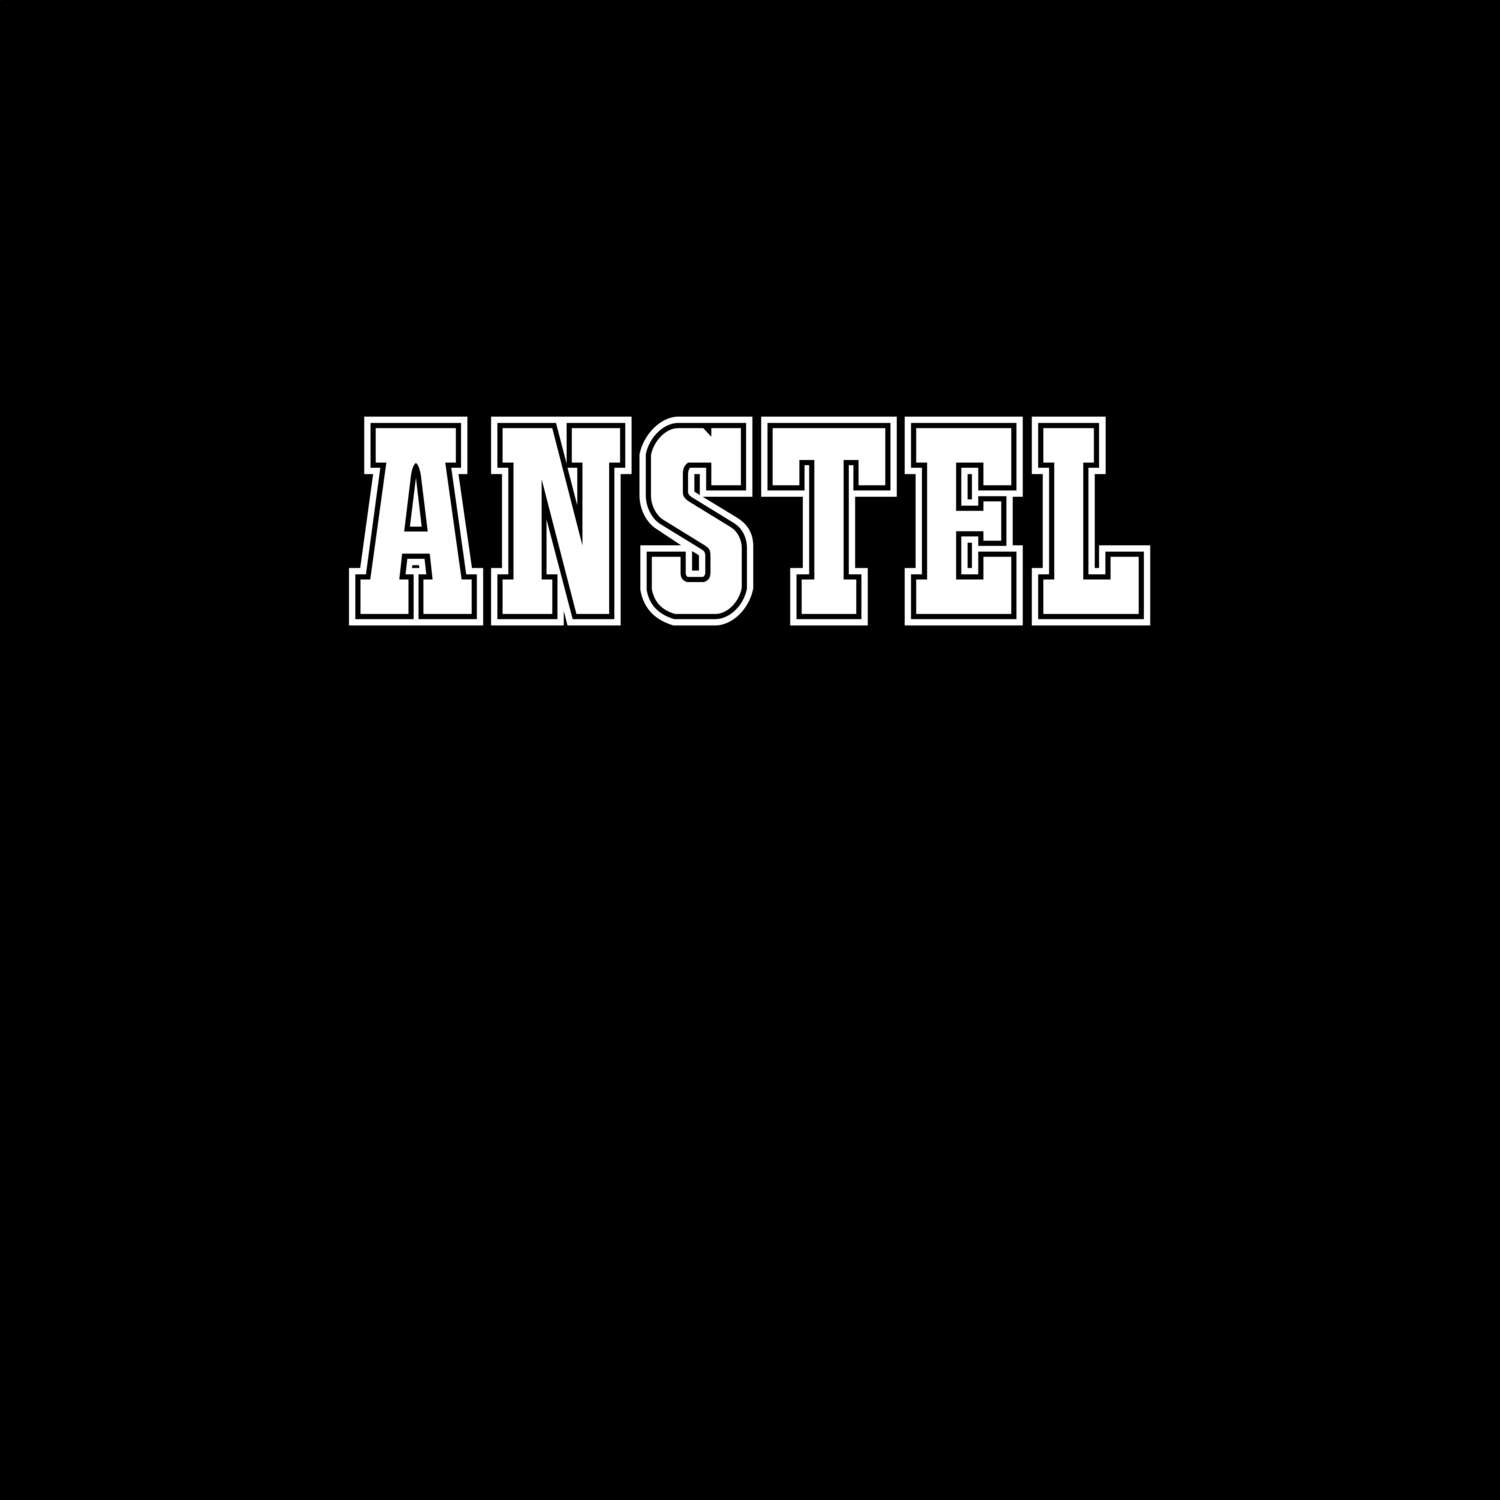 Anstel T-Shirt »Classic«